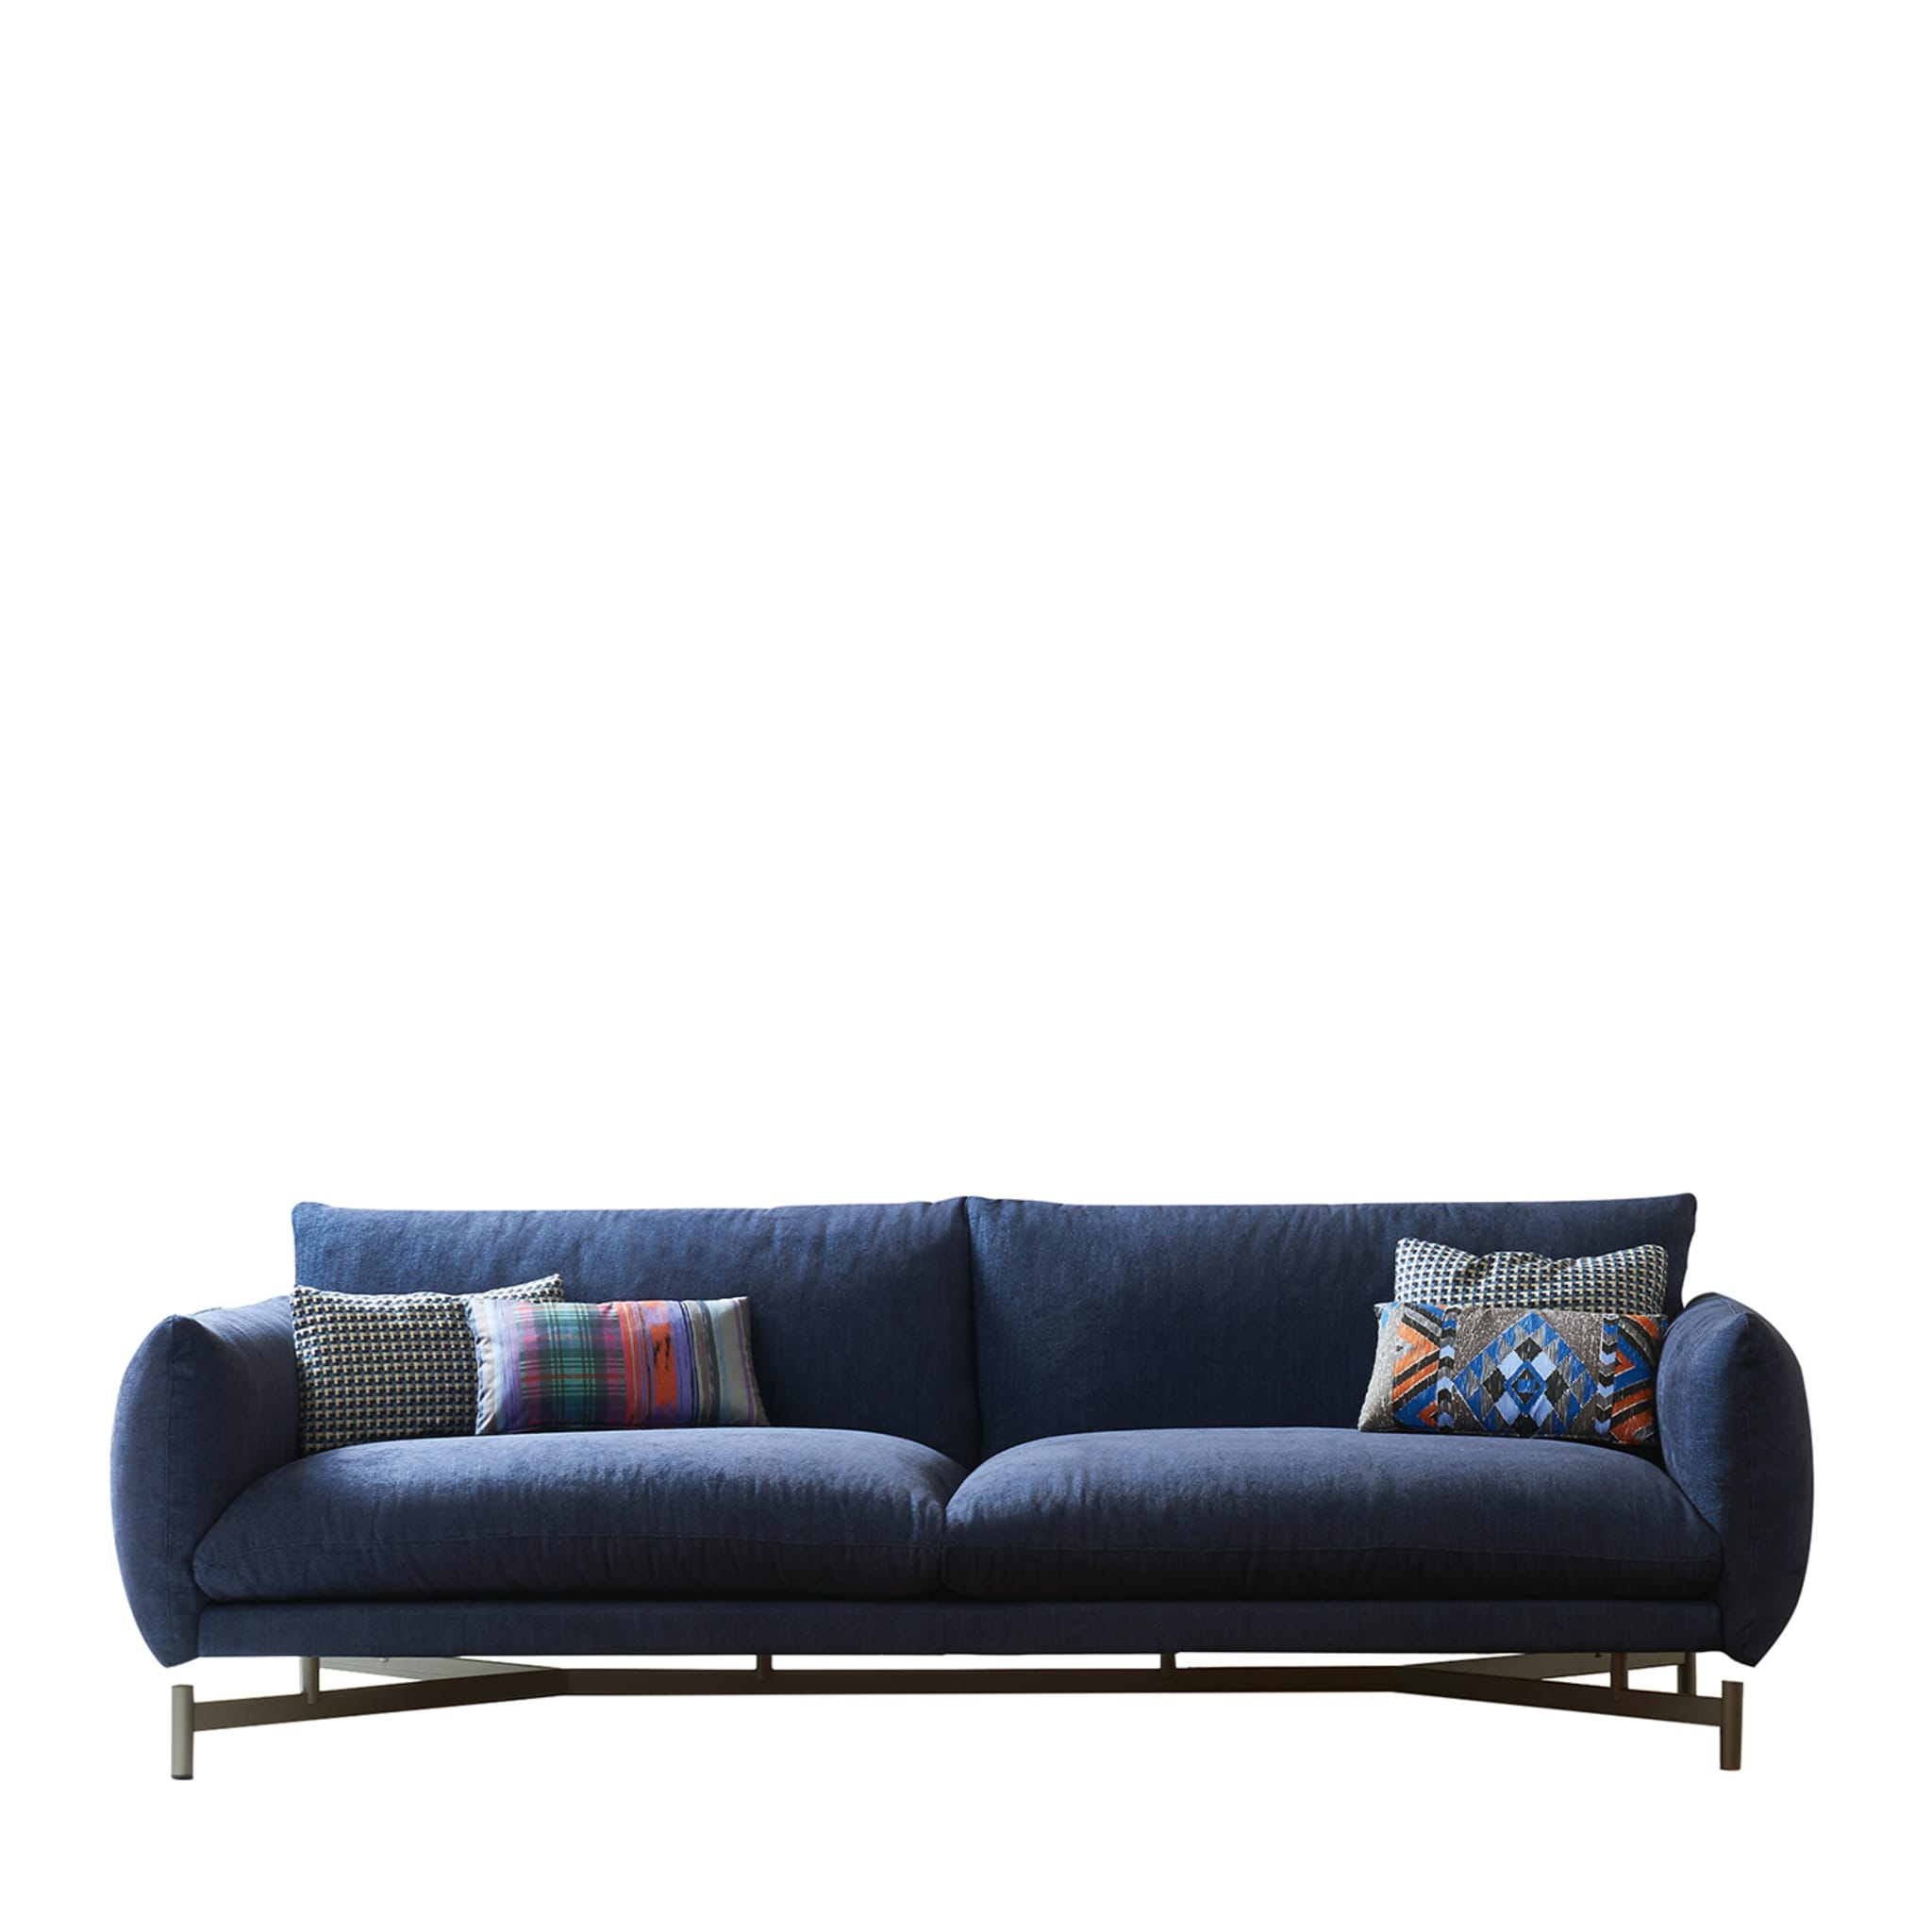 Koa Blue Sofa by Angeletti Ruzza - Main view